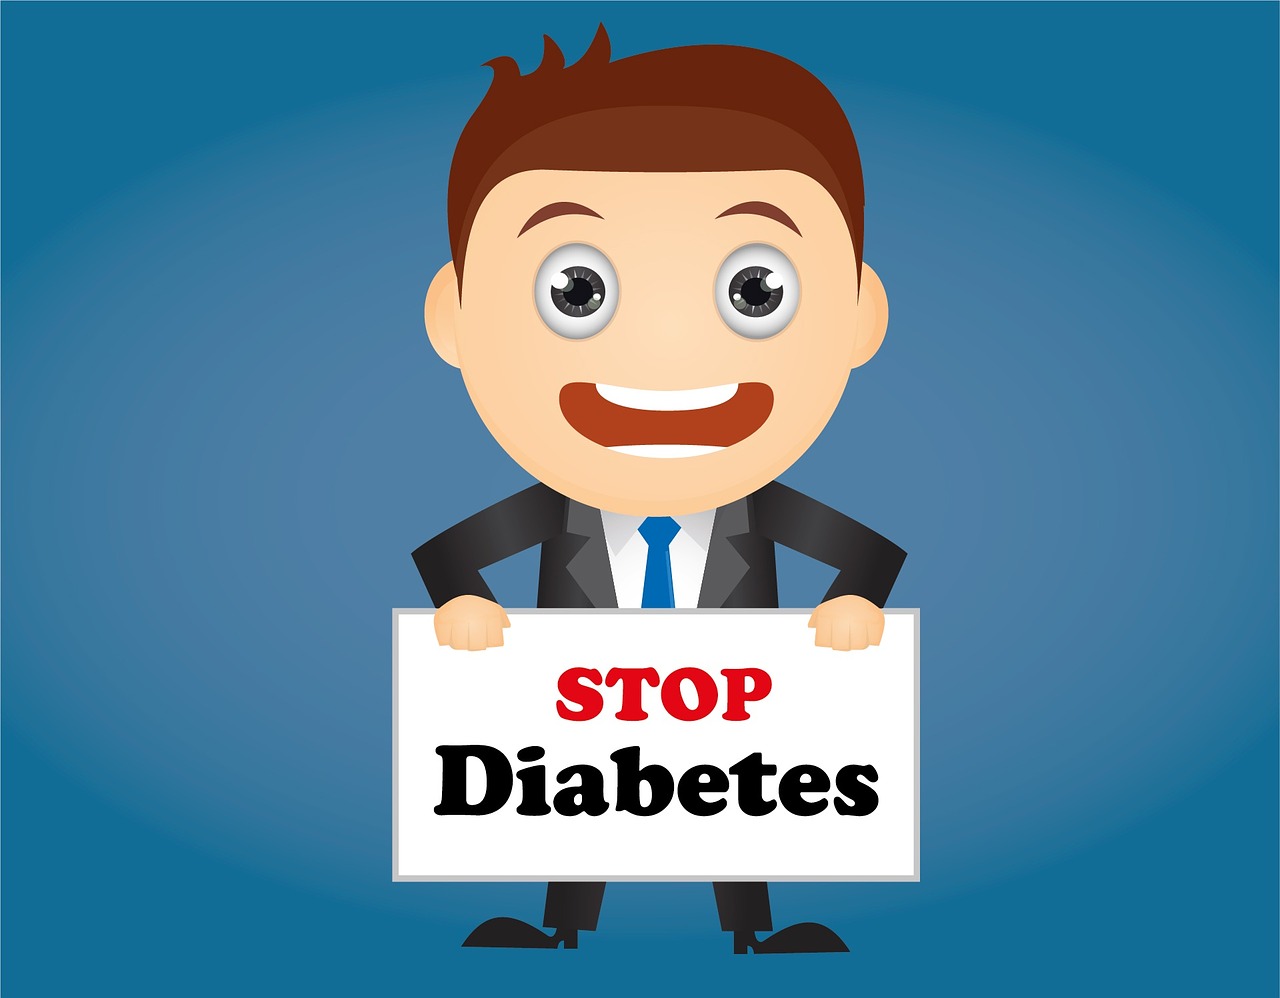 Diabetes,stop,blood,sugar,medicine - free image from needpix.com